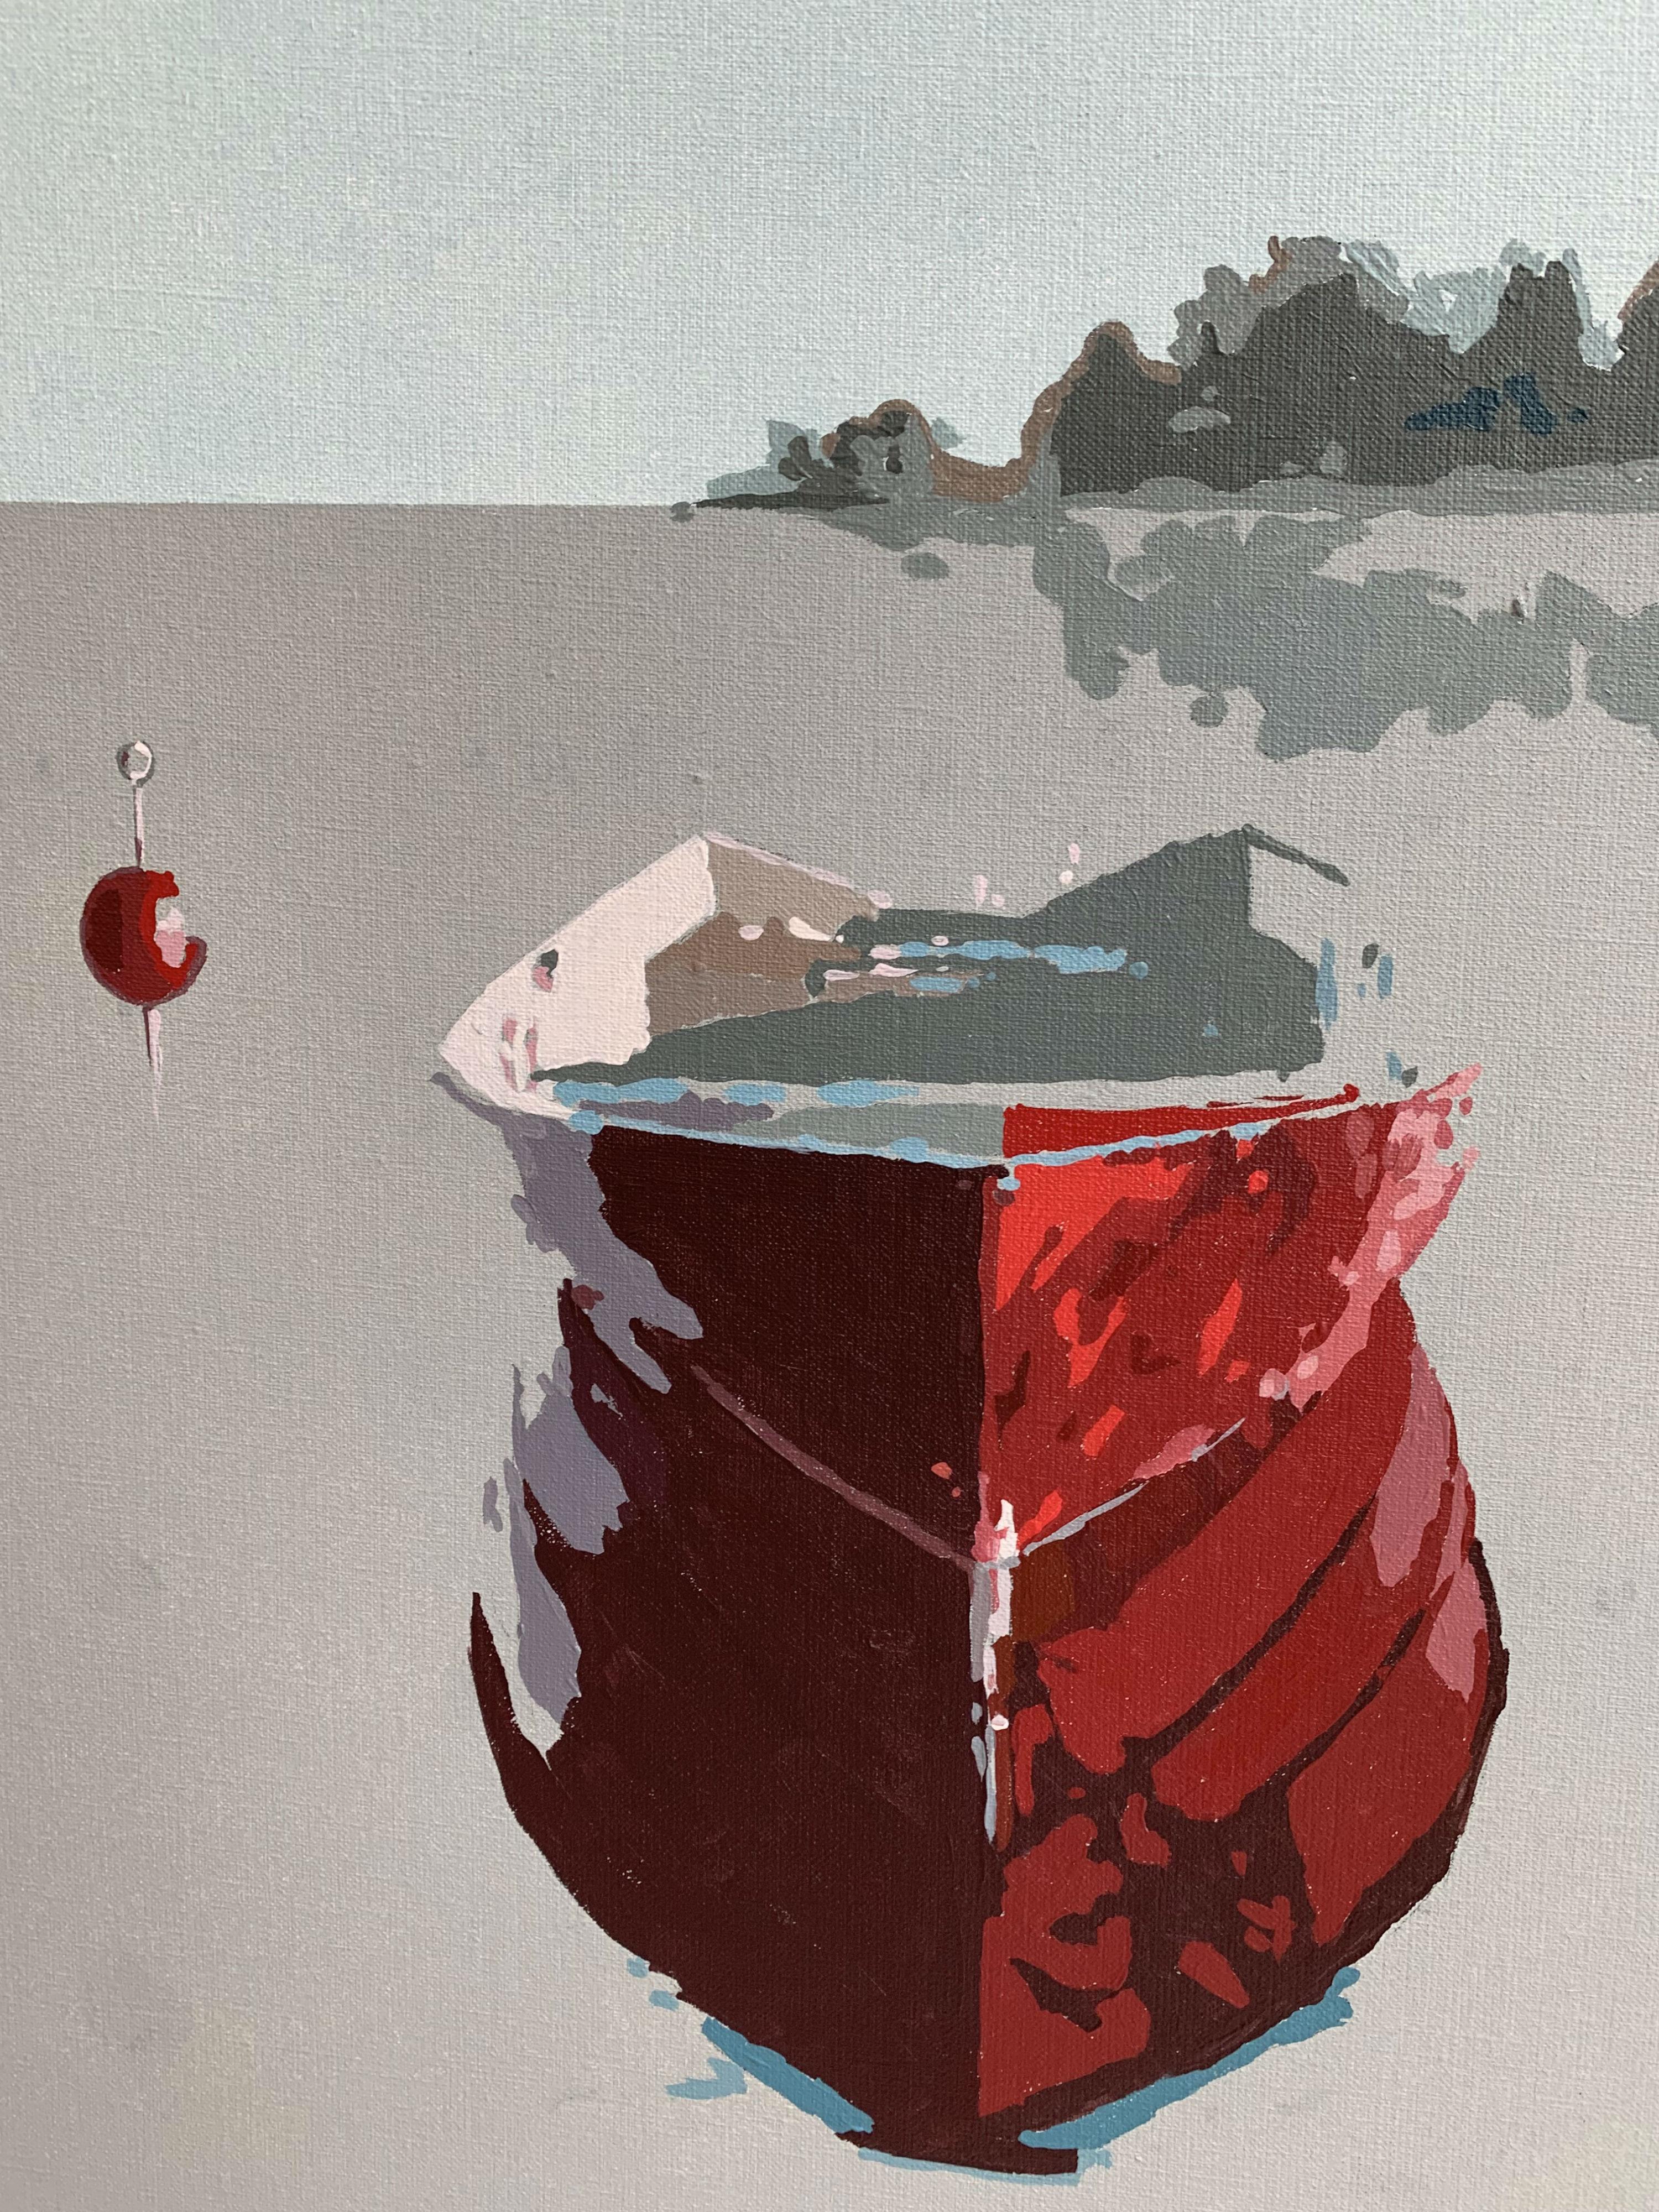 Red boat - Contemporary Figurative Acrylic Painting, Minimalism, Pop art - Gray Figurative Painting by Joanna Woyda